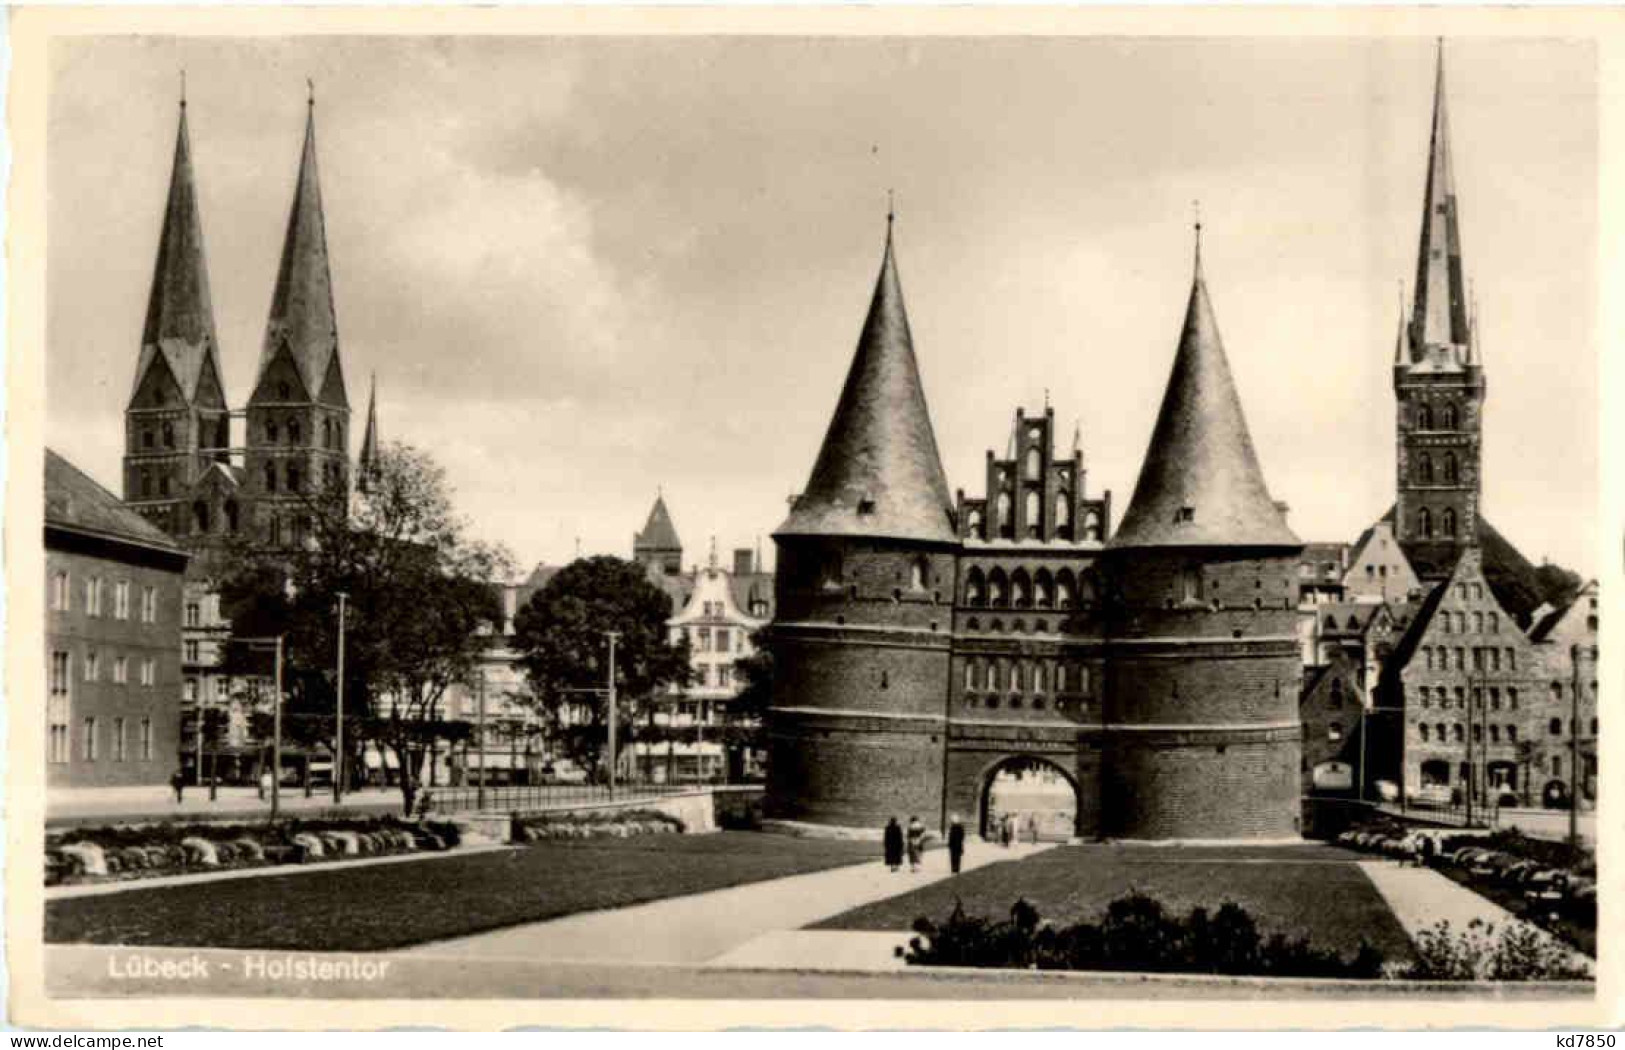 Lübeck - Holstentor - Lübeck